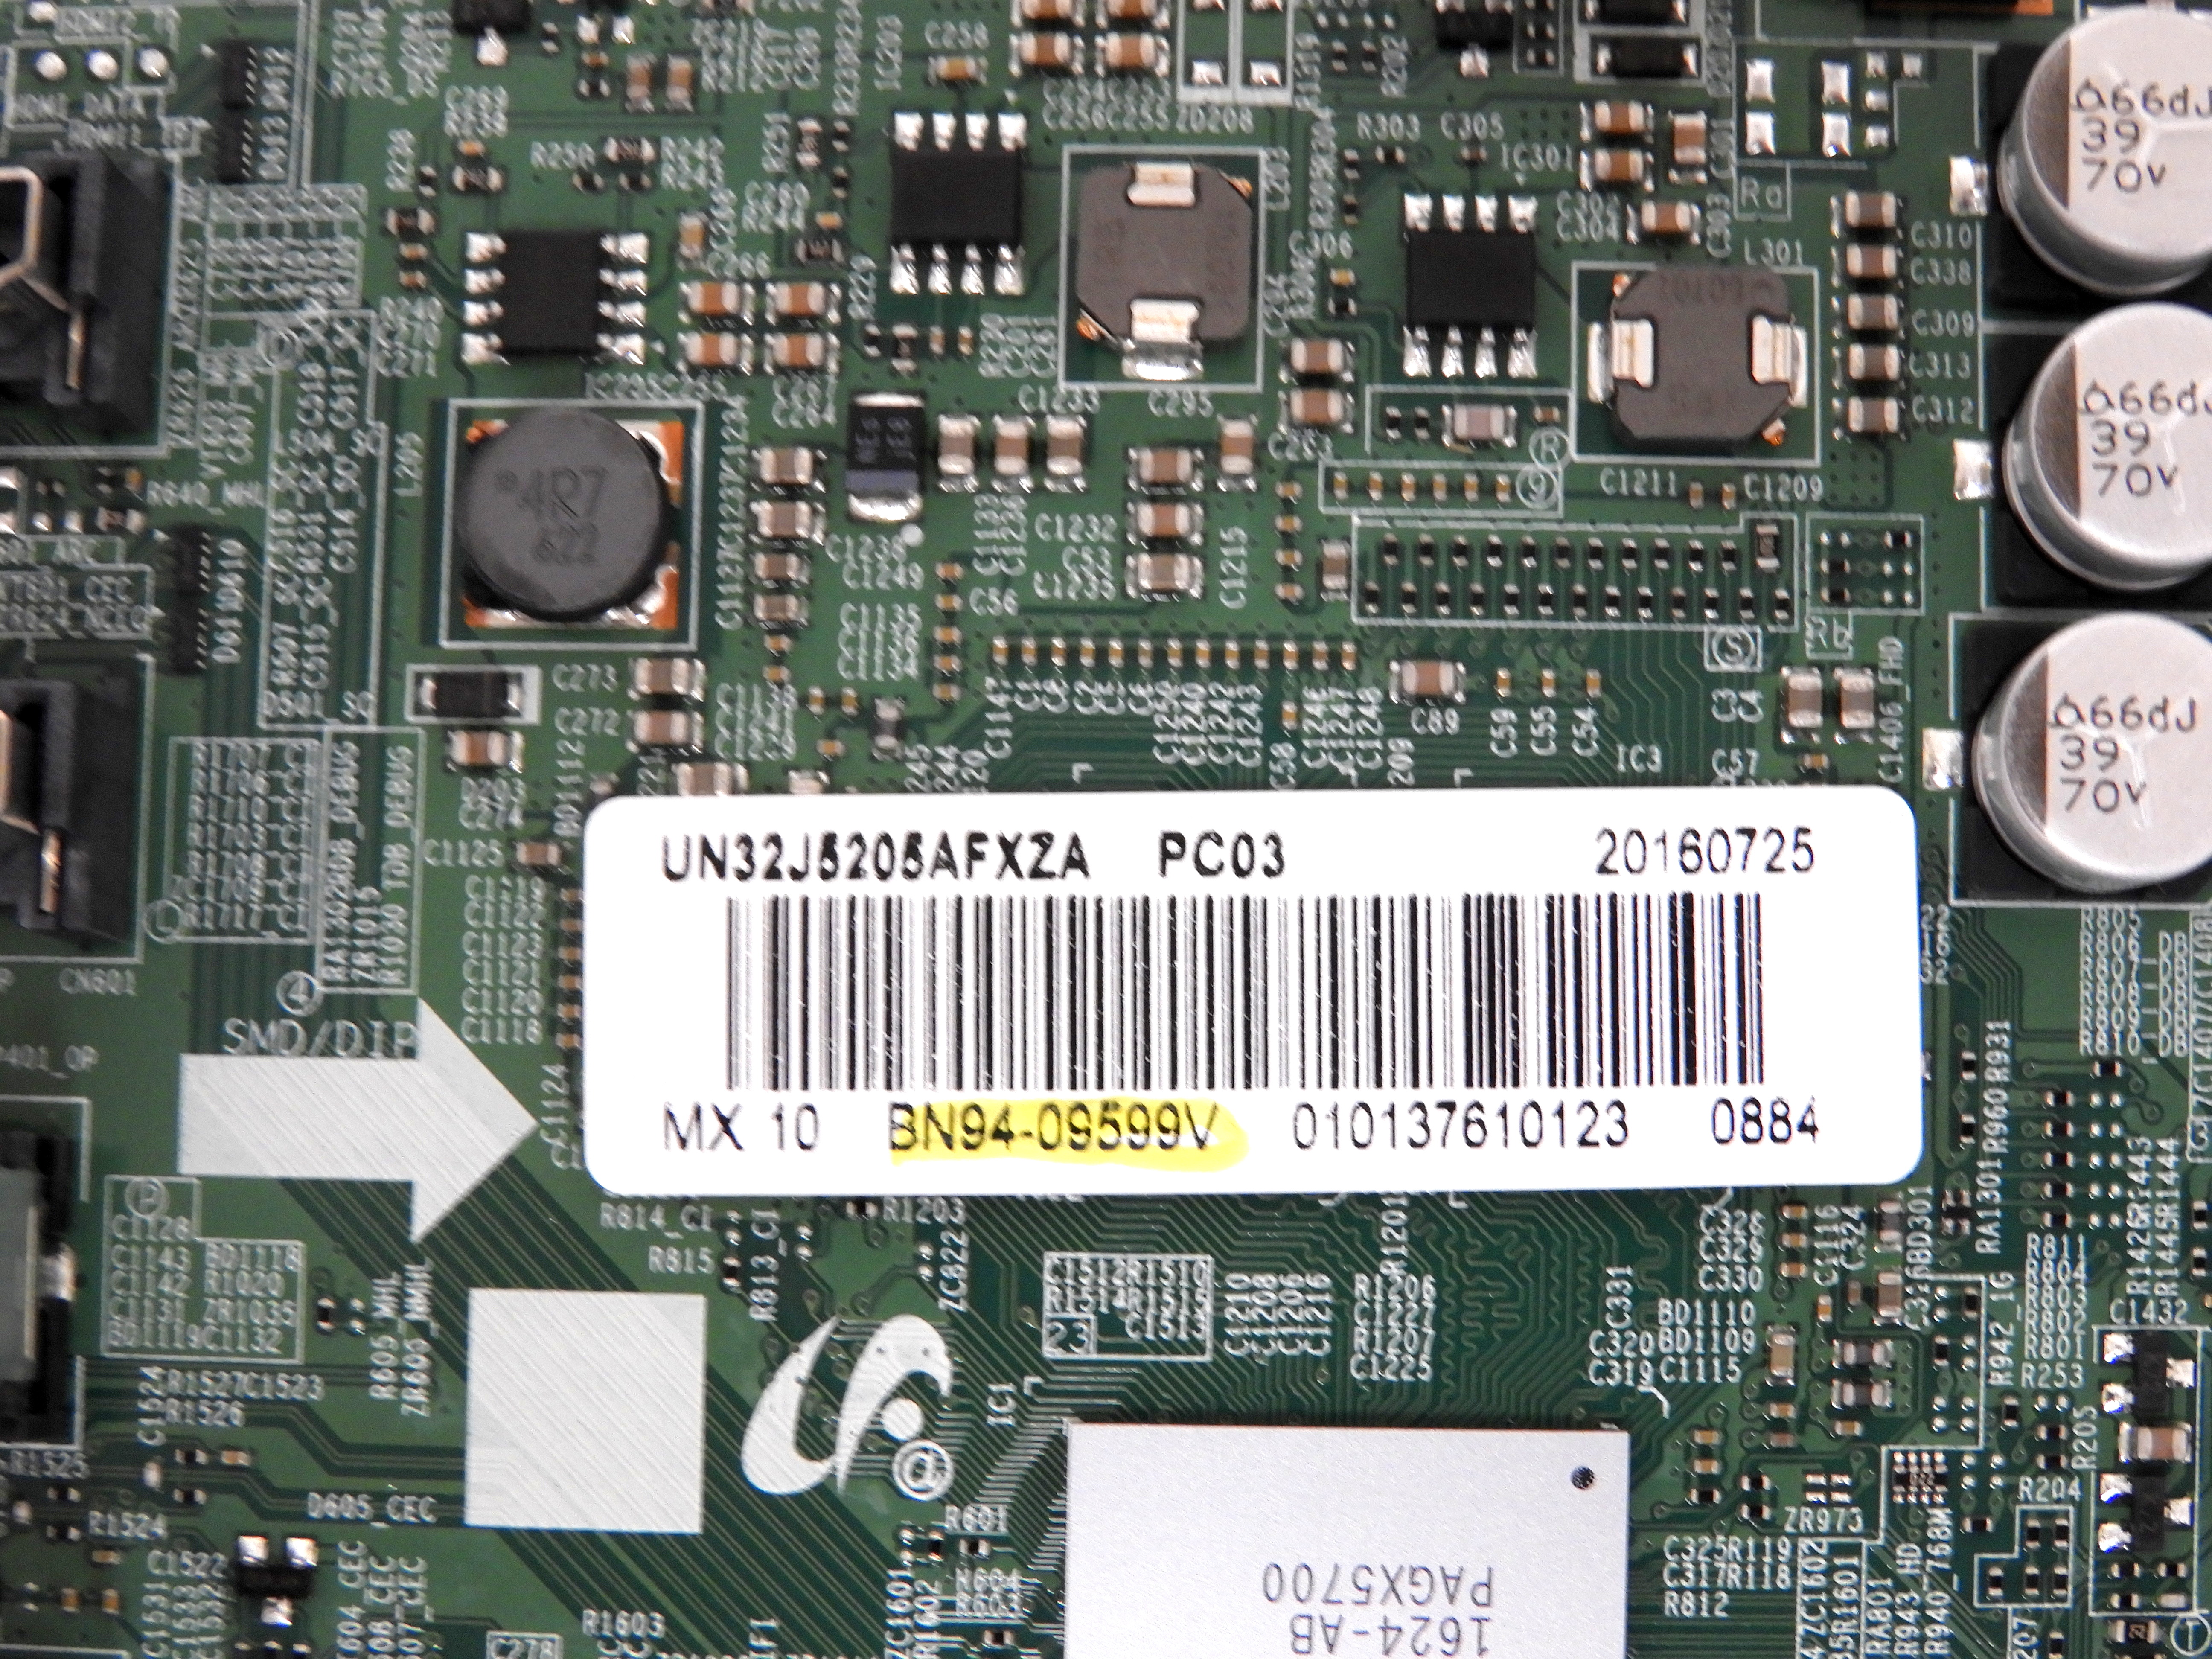 Samsung UN32J5205AF Main Board BN94-09599V - TV Parts Home